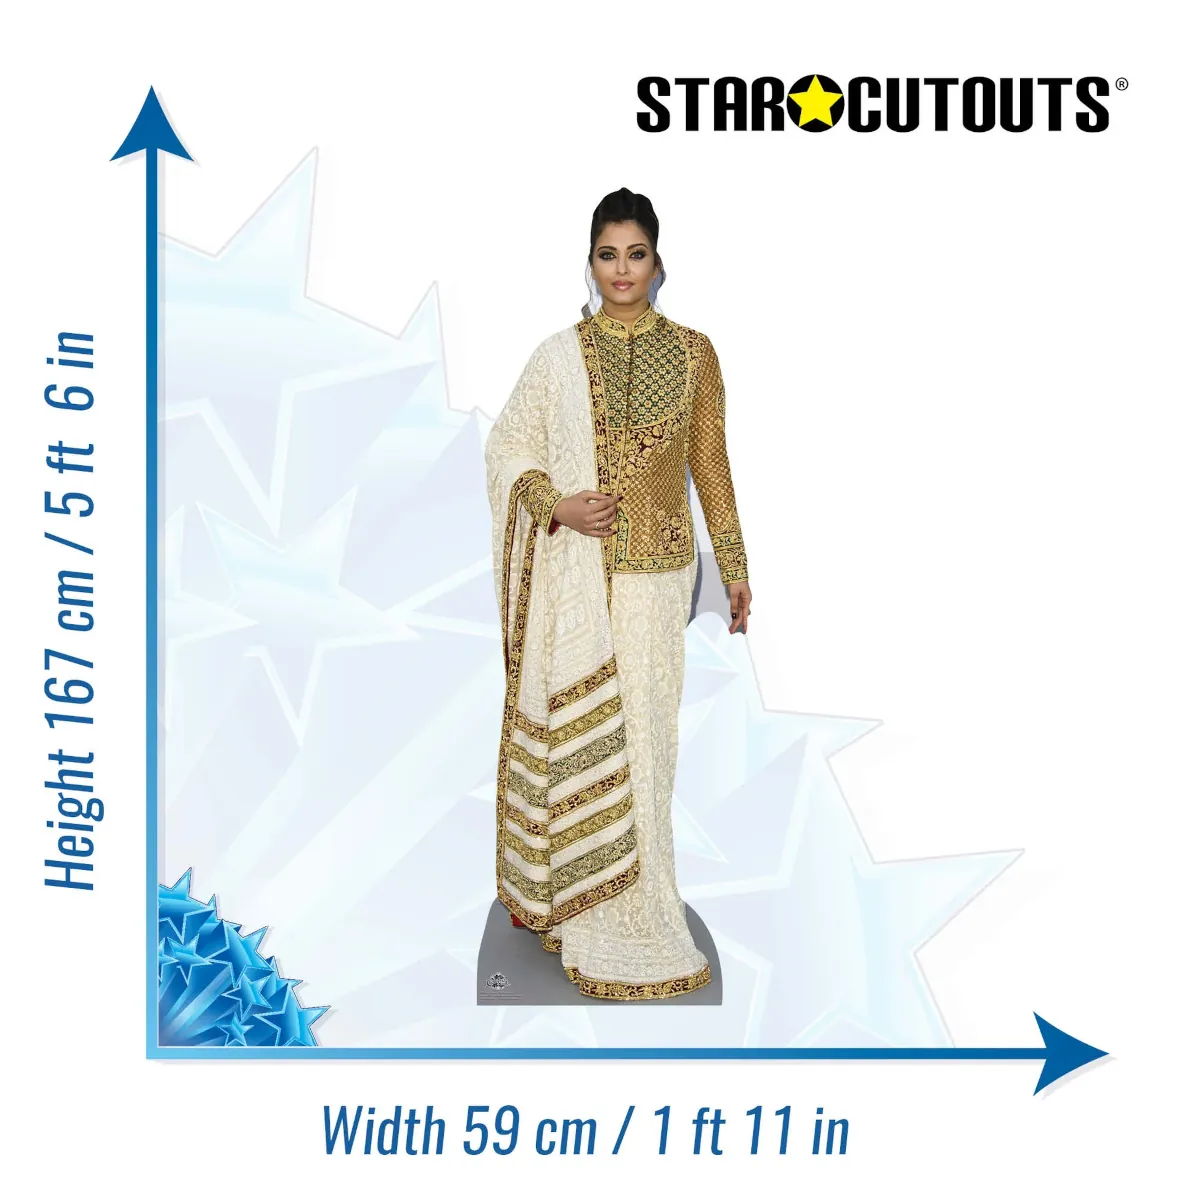 CS584 Aishwarya Rai Bachchan (Indian Actress) Lifesize Cardboard Cutout Standee Size